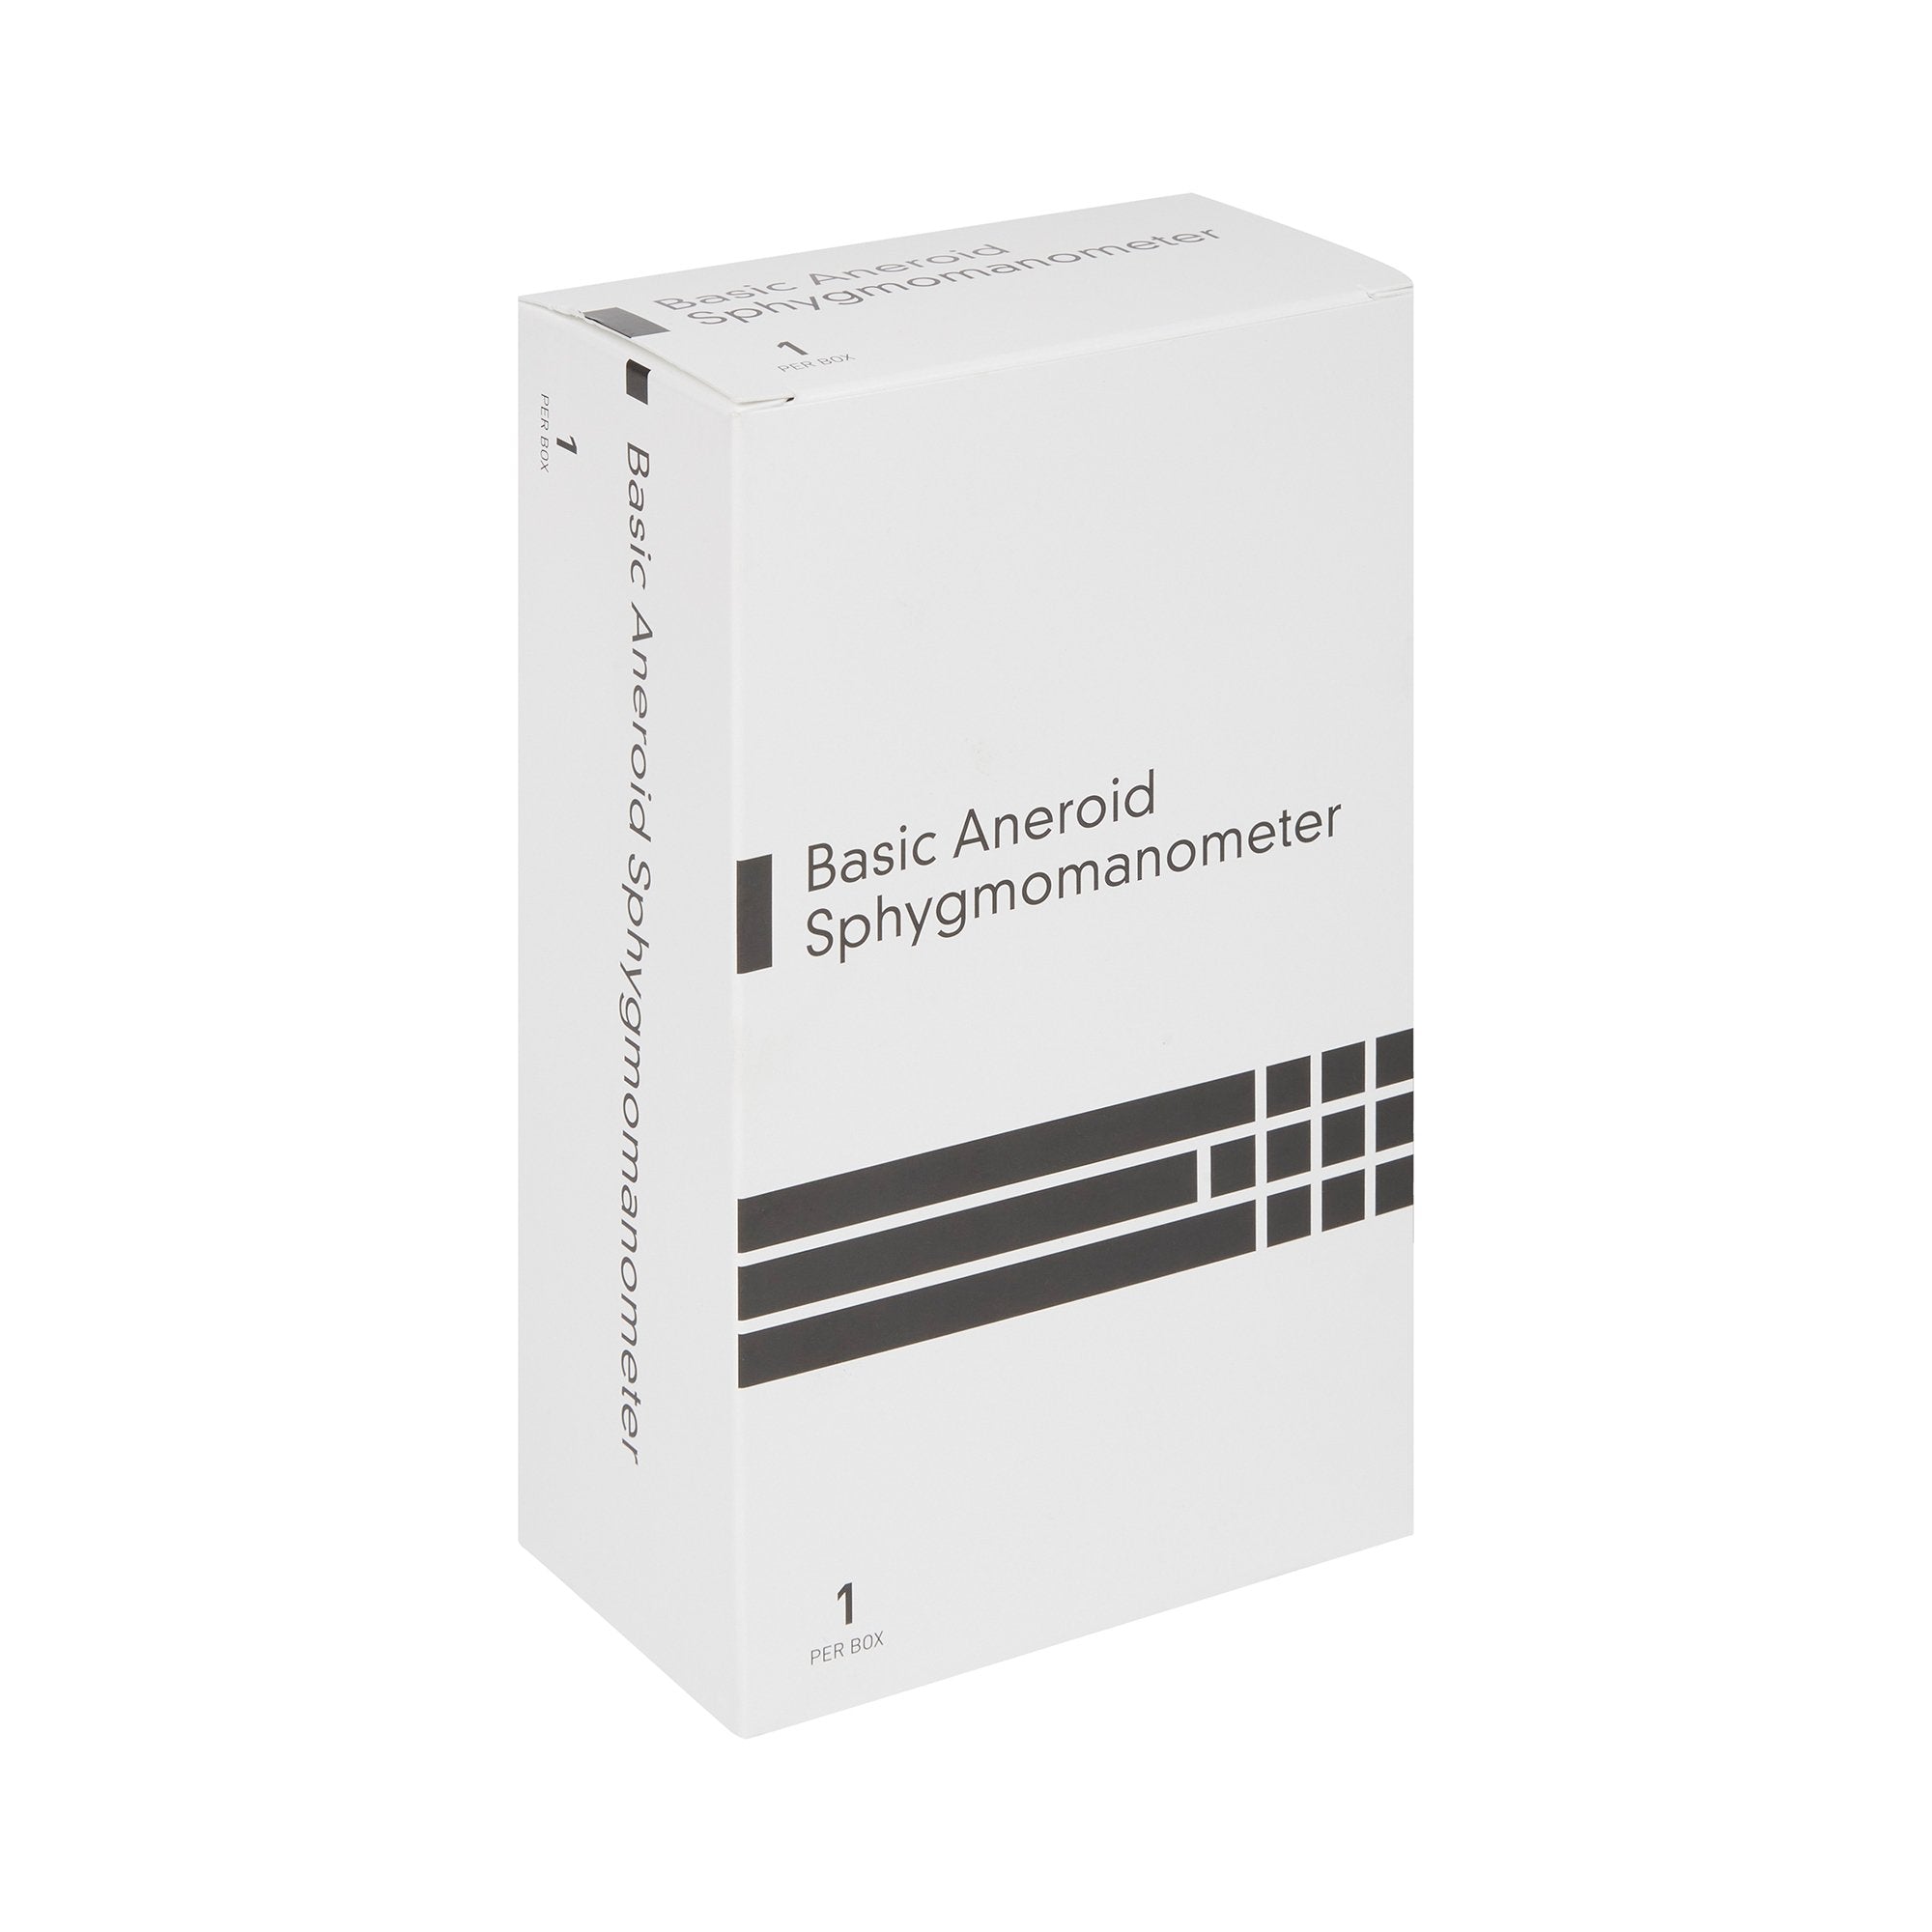 Basic Aneroid Sphygmomanometer Unit